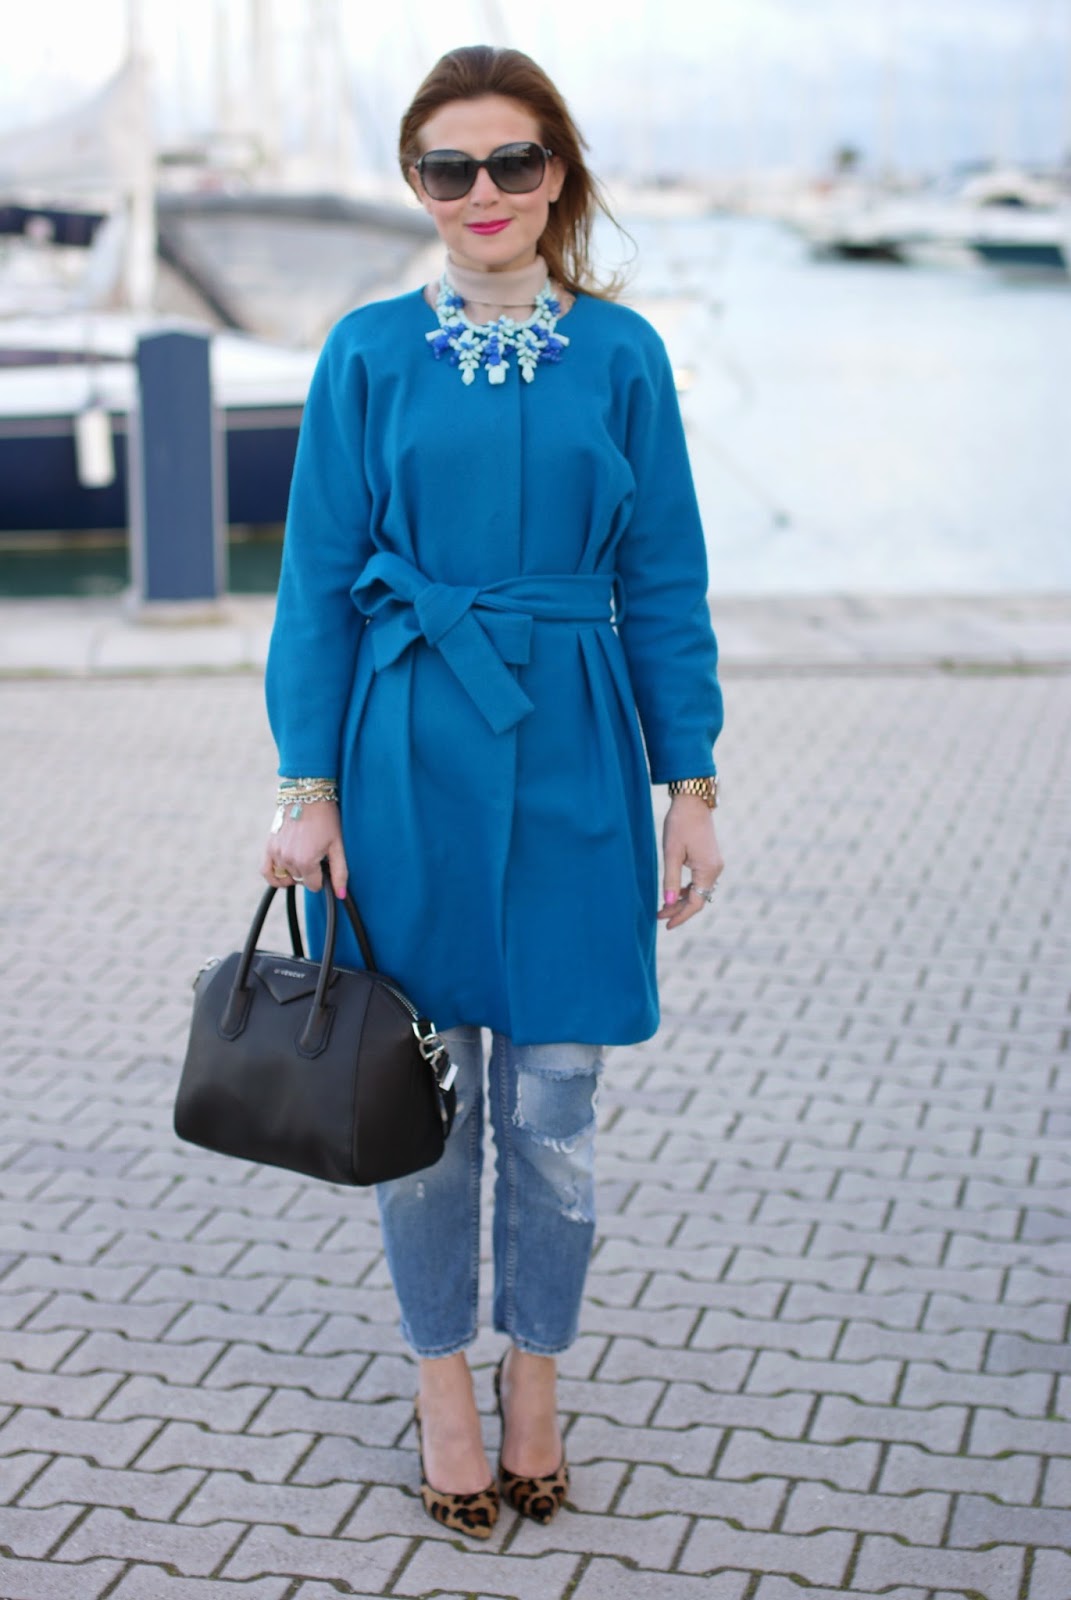 Givenchy Antigona bag, Sapphire blue coat, Jollychic coat, Fashion and Cookies, fashion blogger